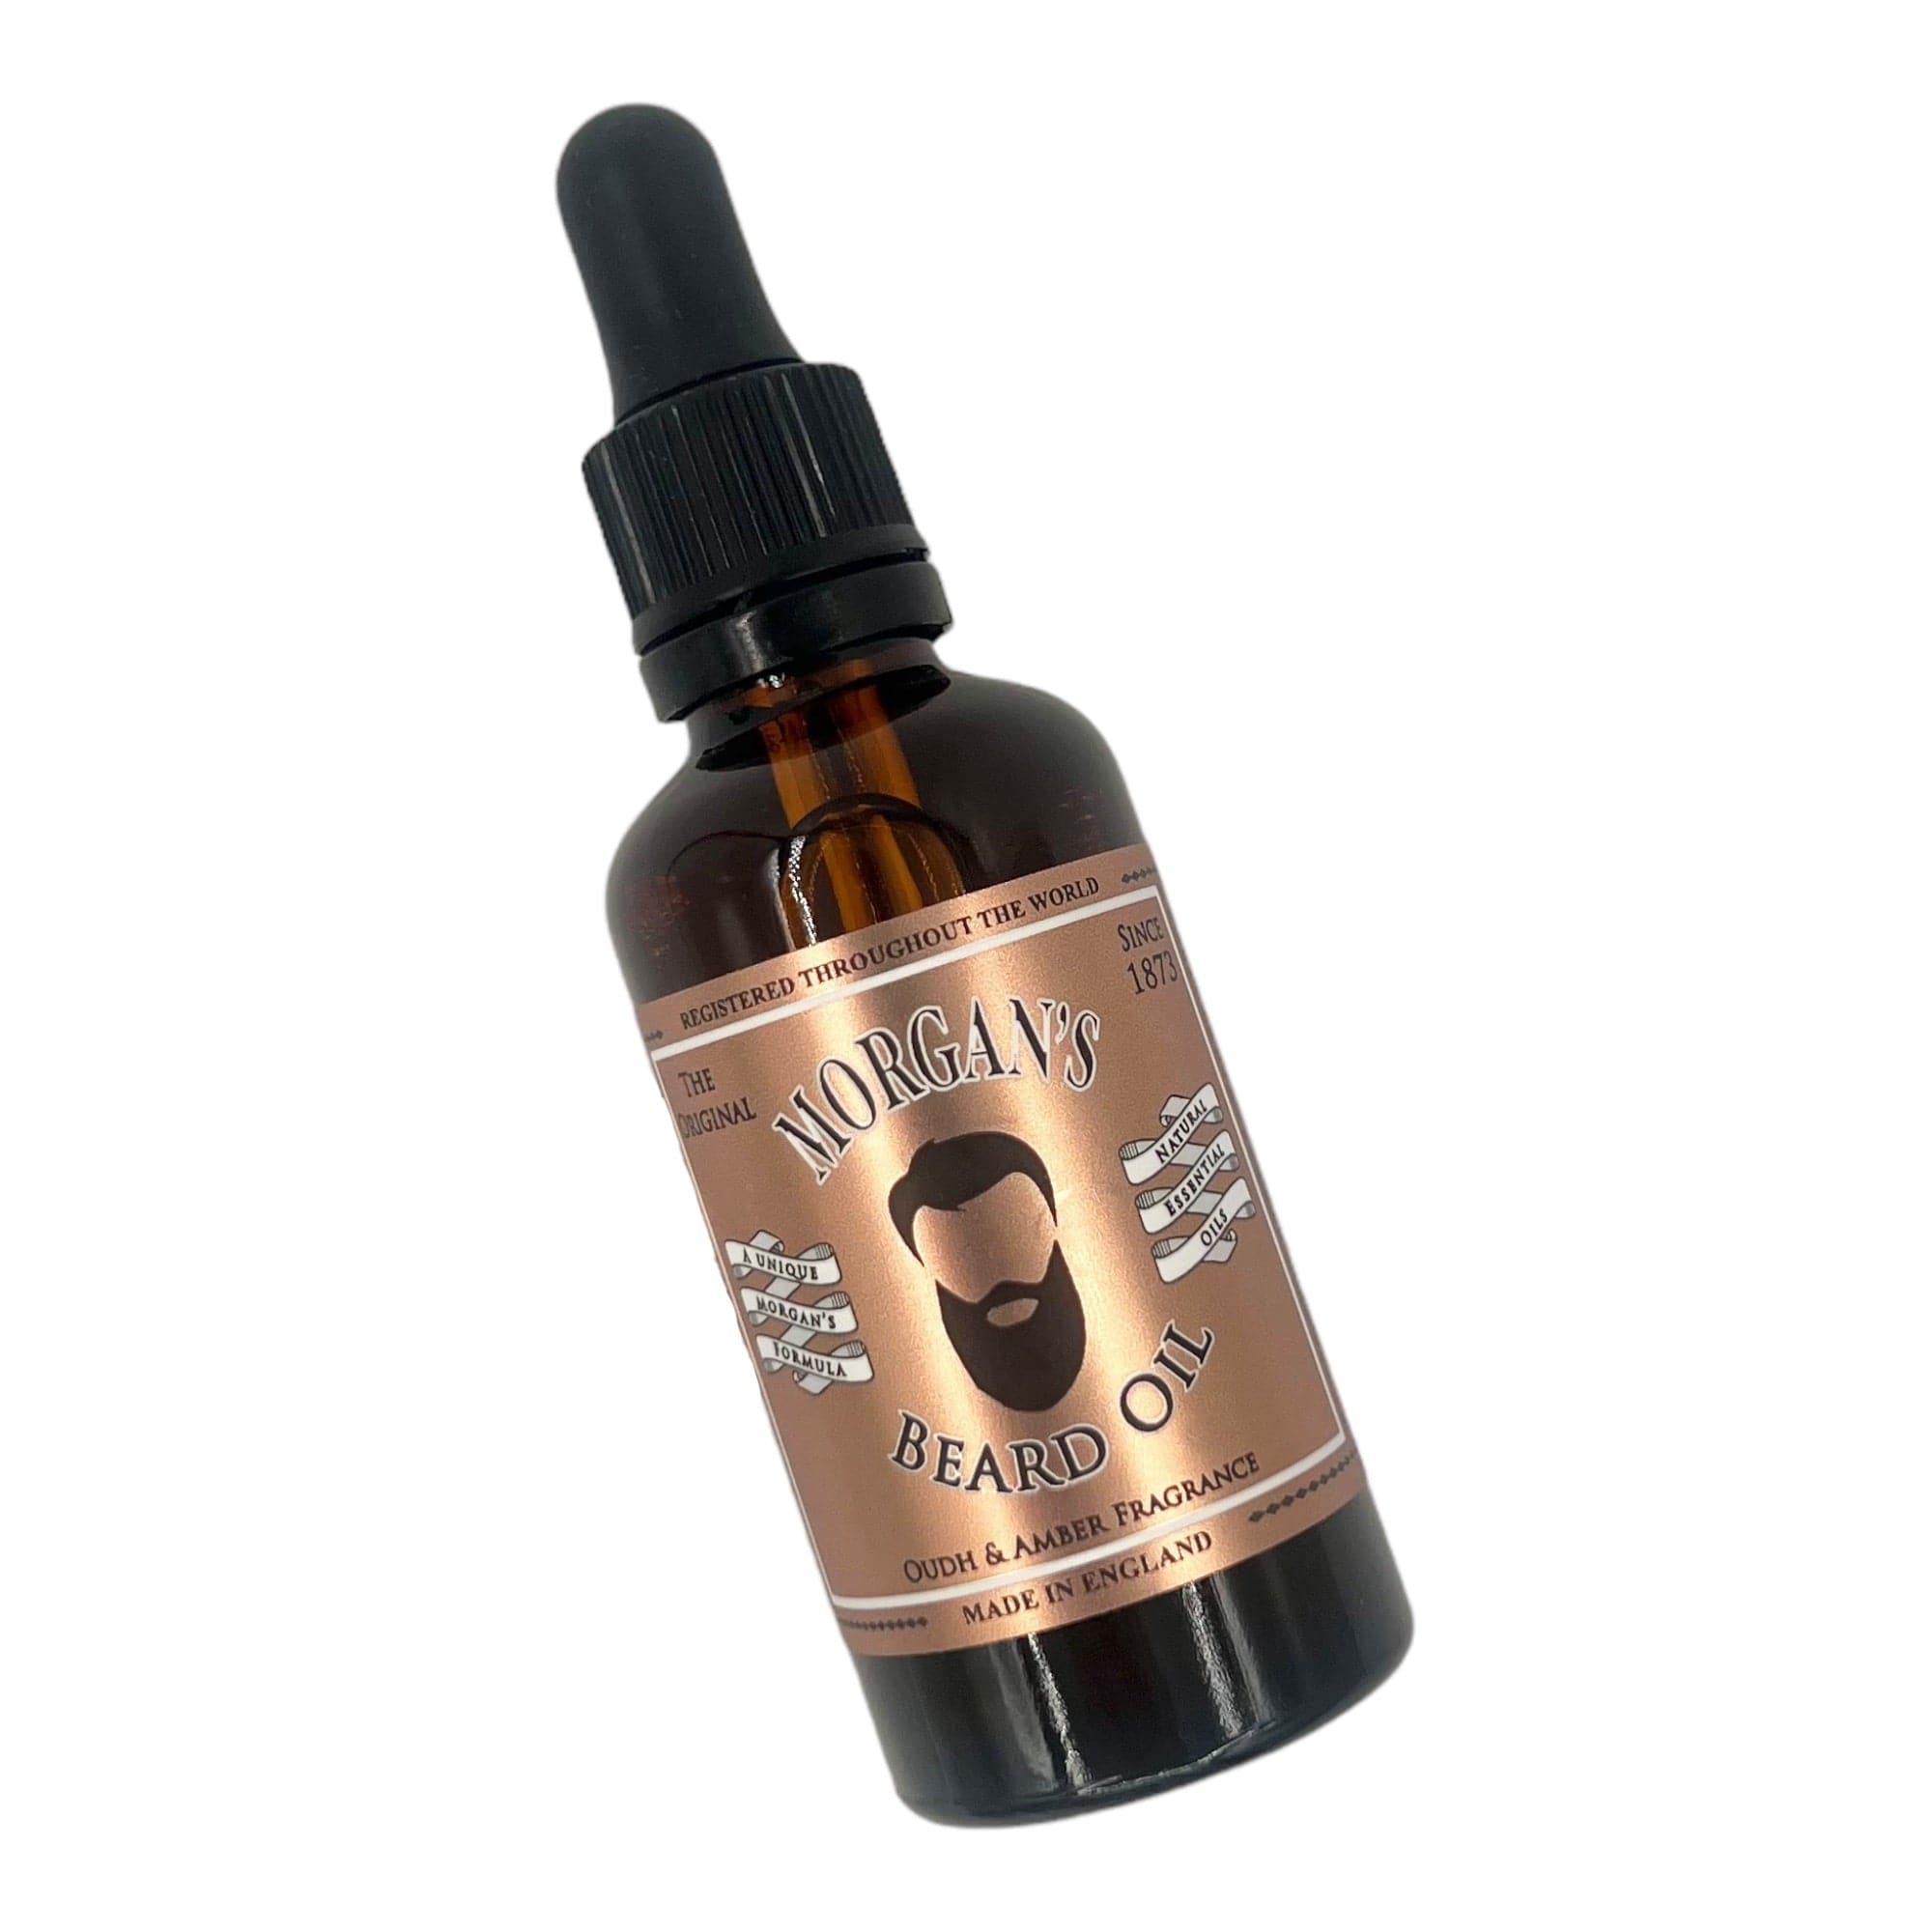 Morgan's - Beard Oil Oudh & Amber Fragrance 50ml